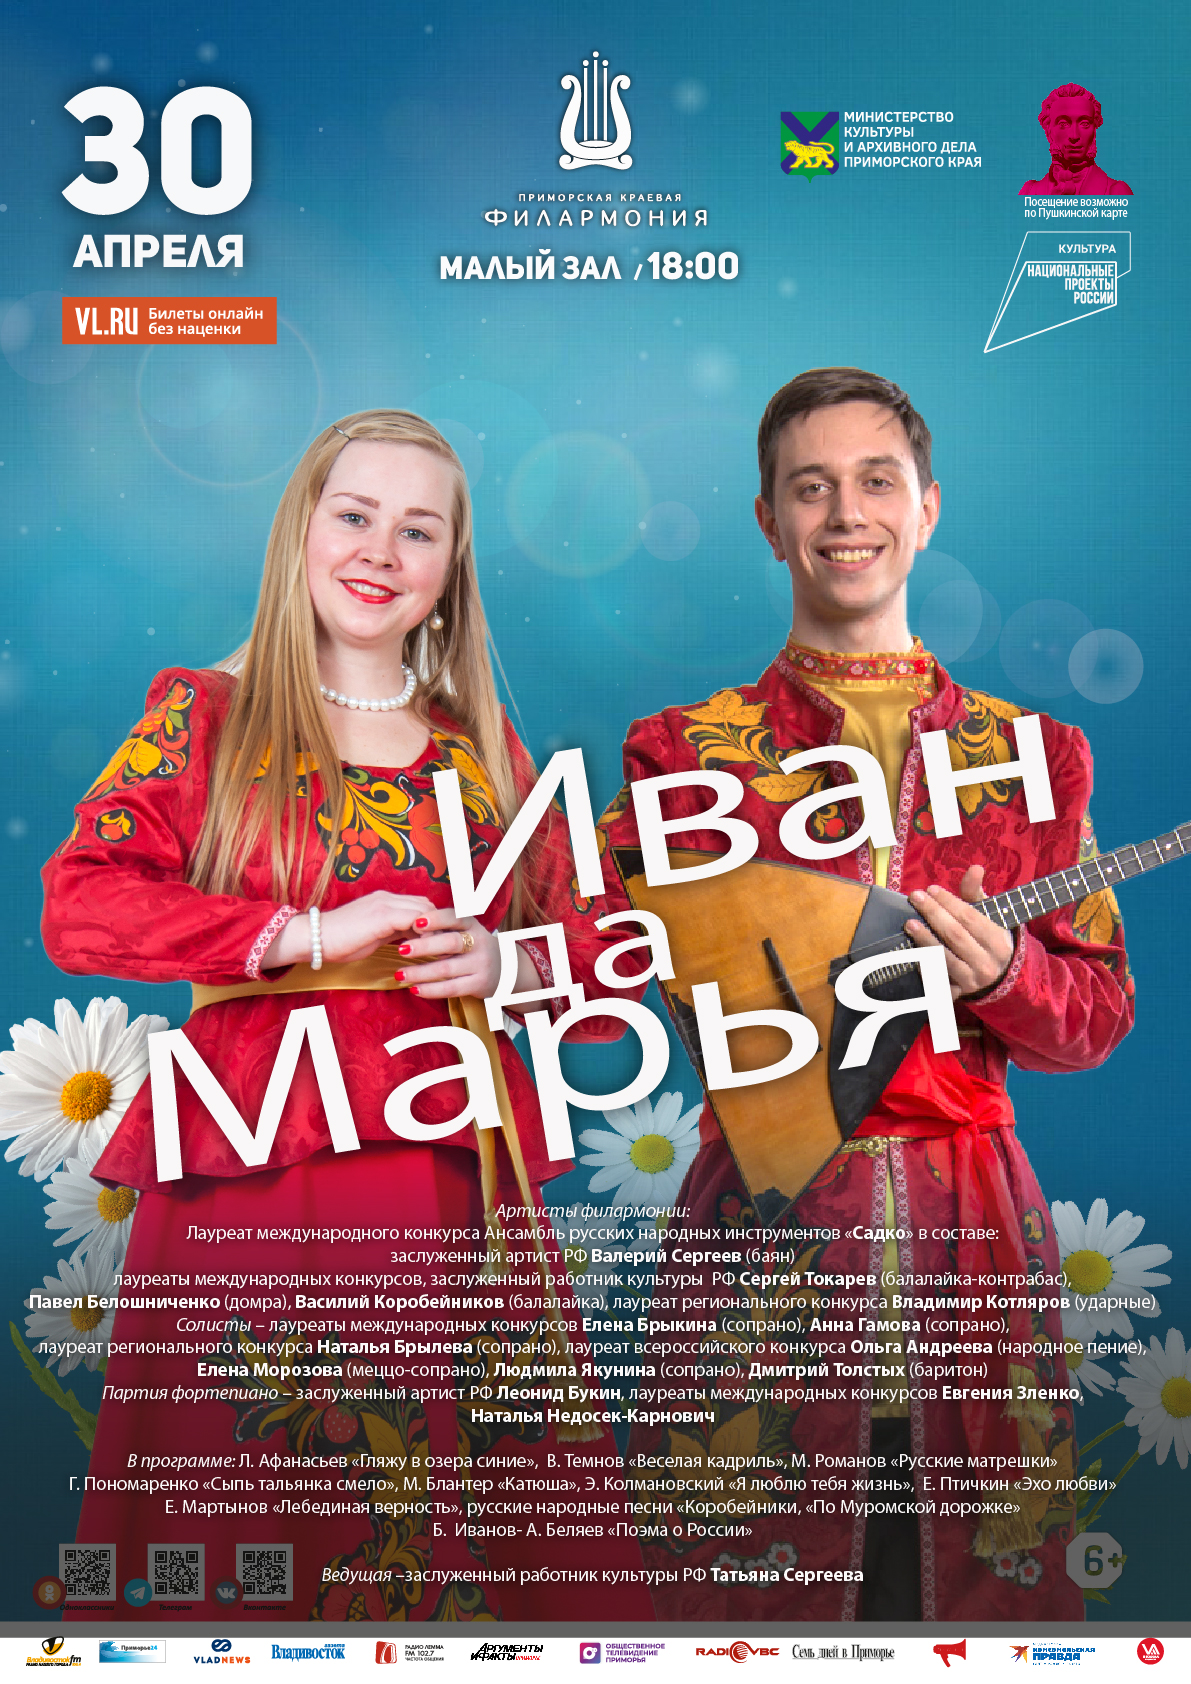 30 апреля Концертная программа «Иван да Марья»